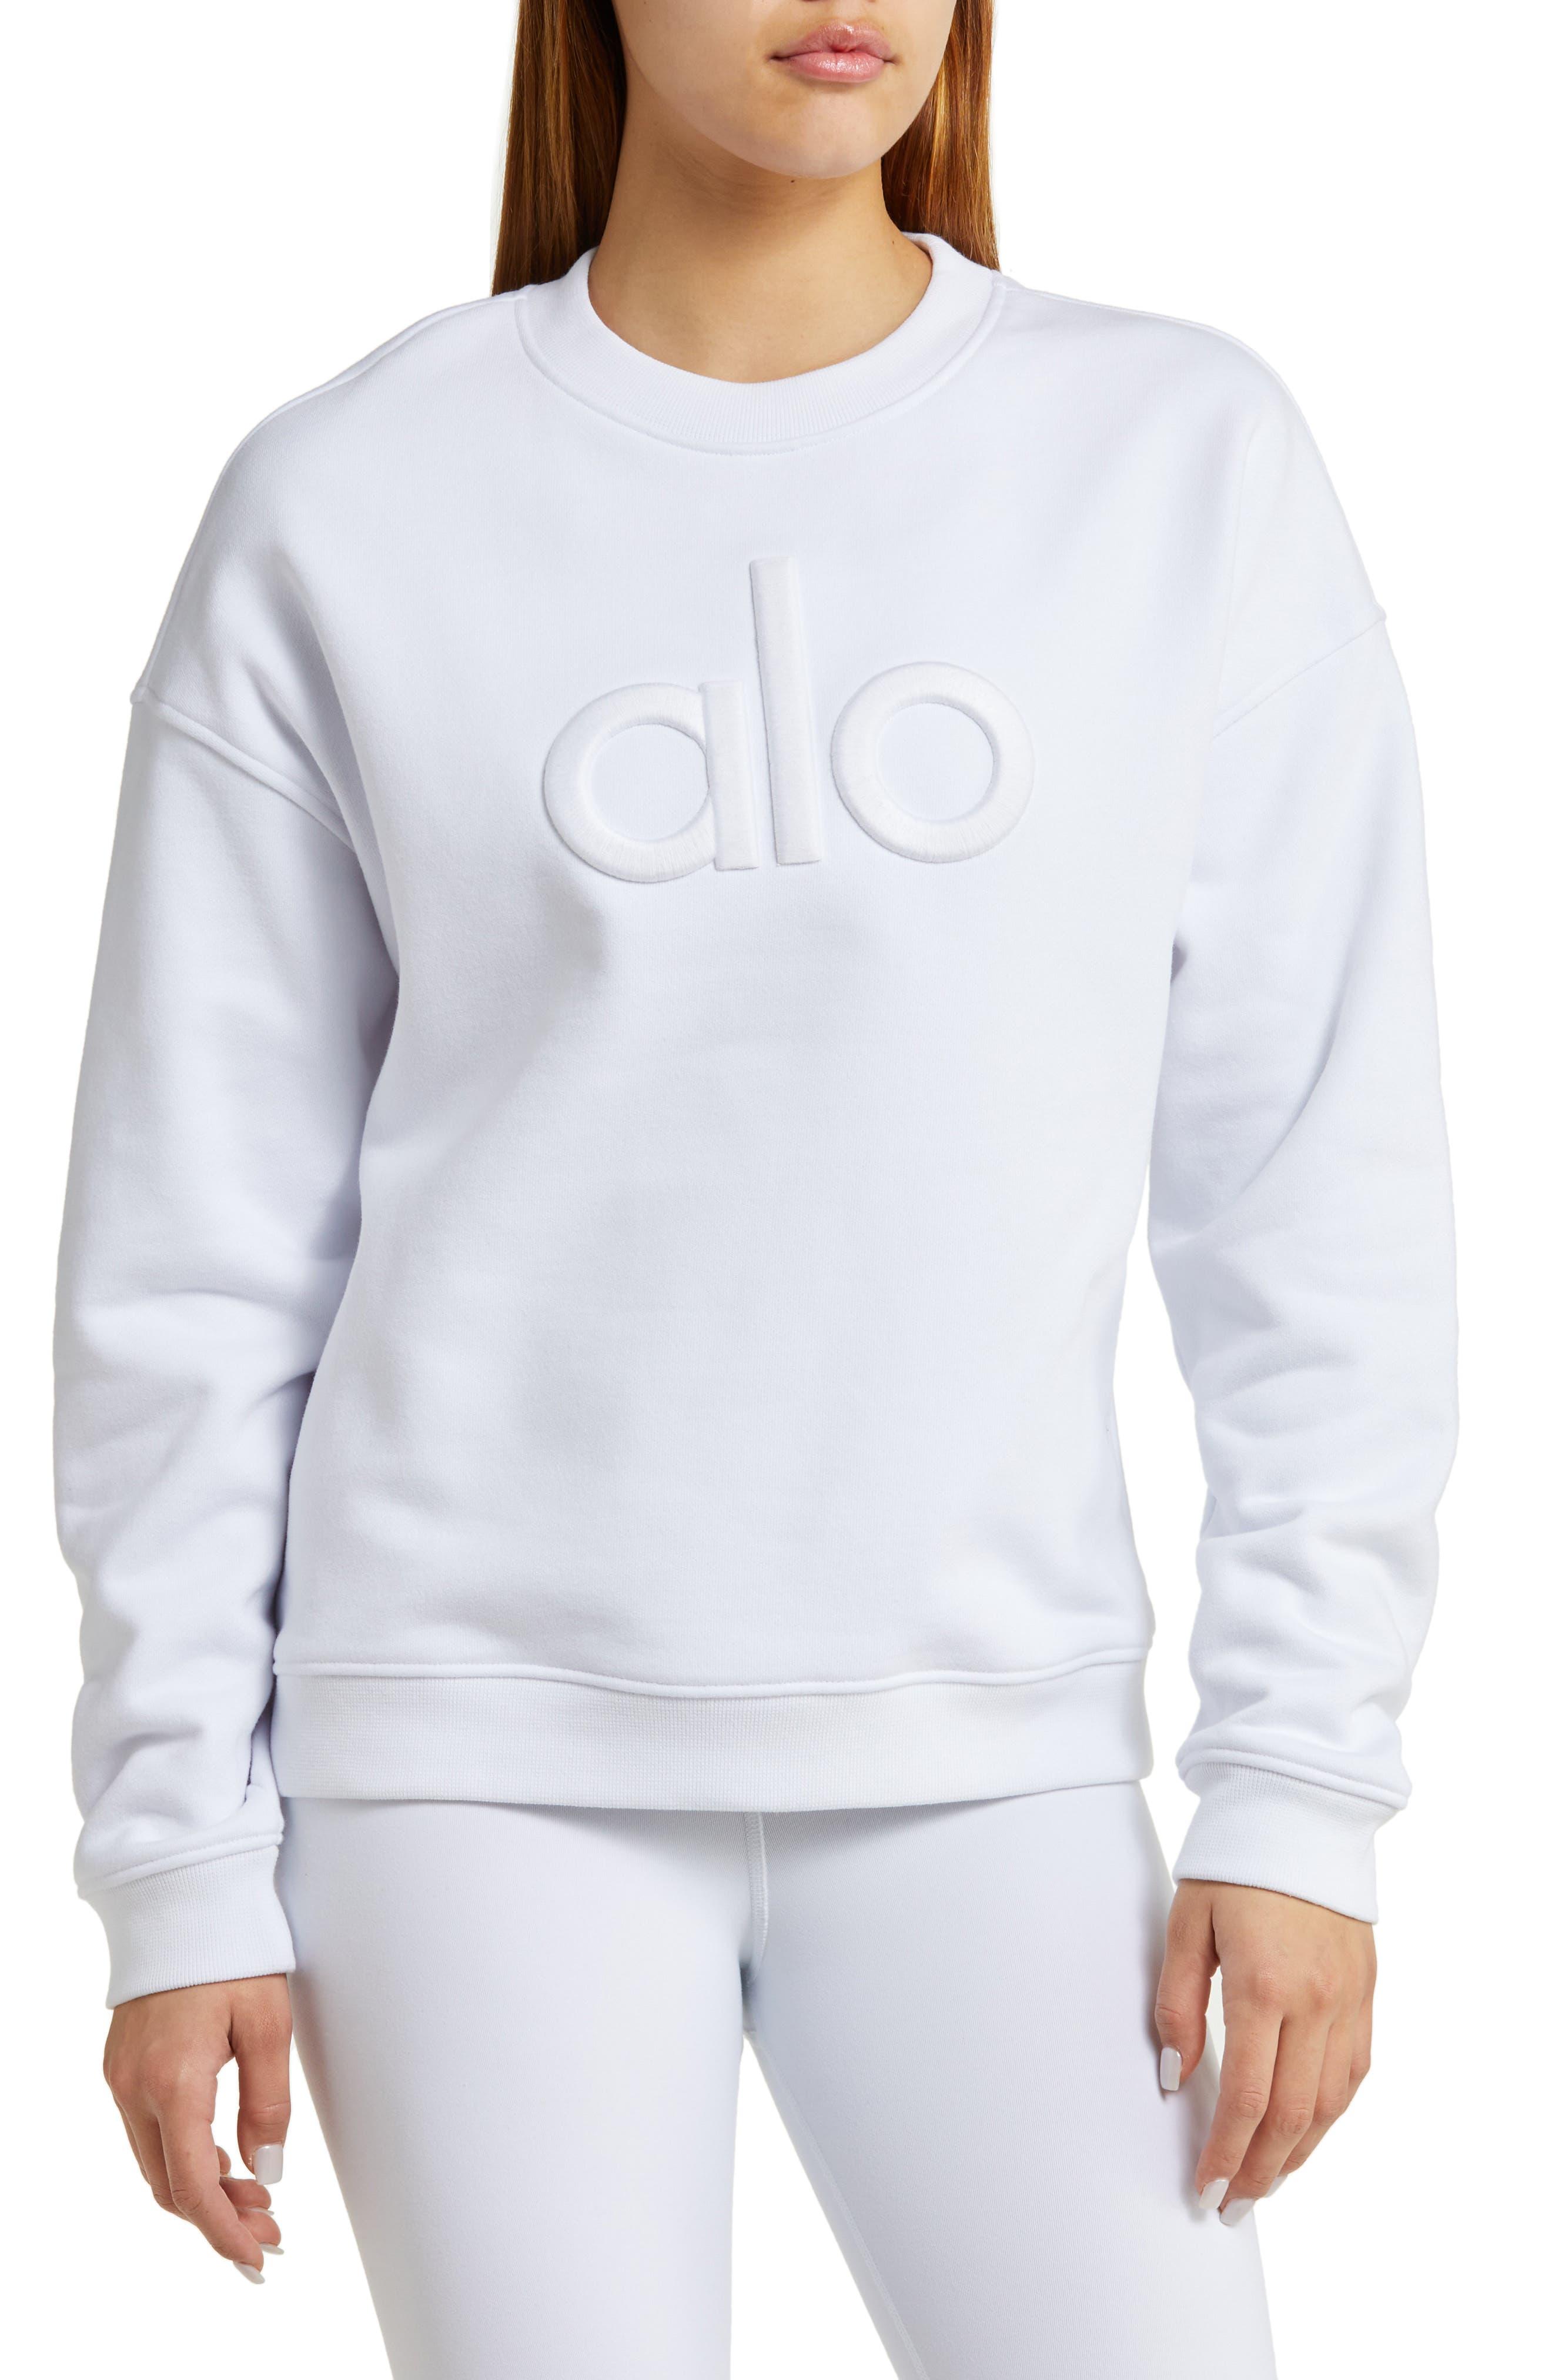 Alo Yoga Renown Emblem Sweatshirt in White